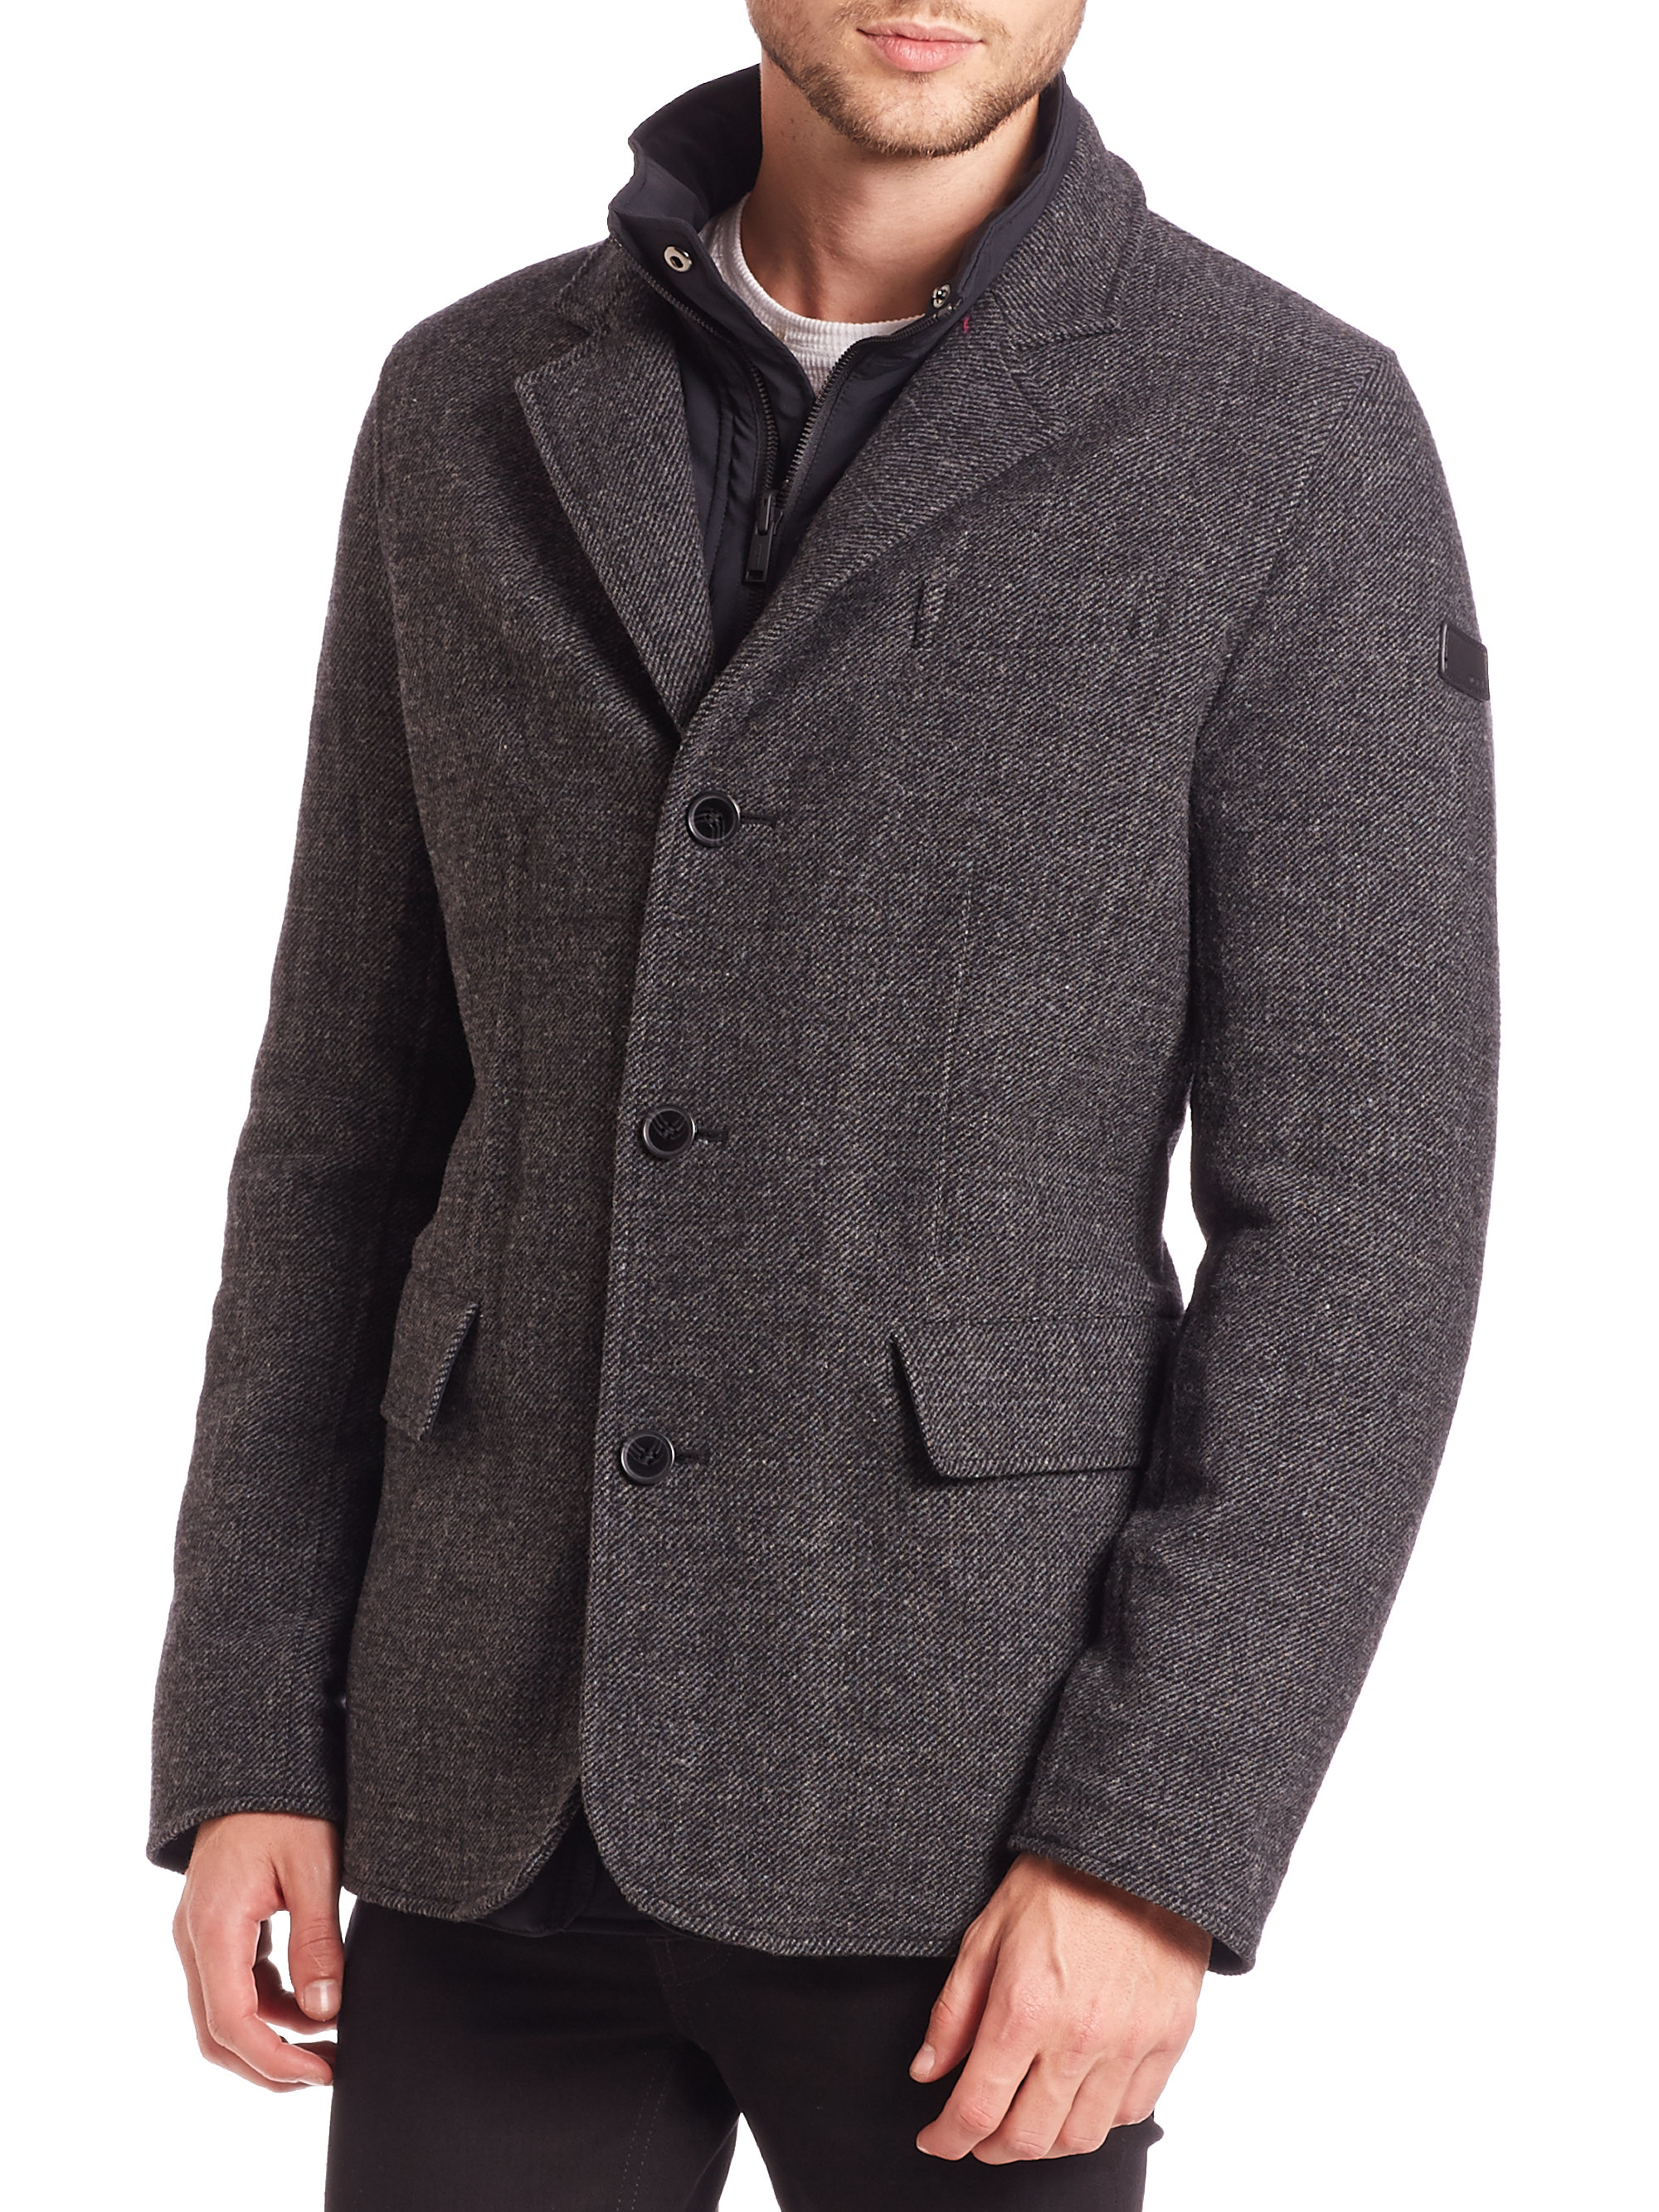 Lyst - Tumi Metropolitan Reversible Jacket in Gray for Men